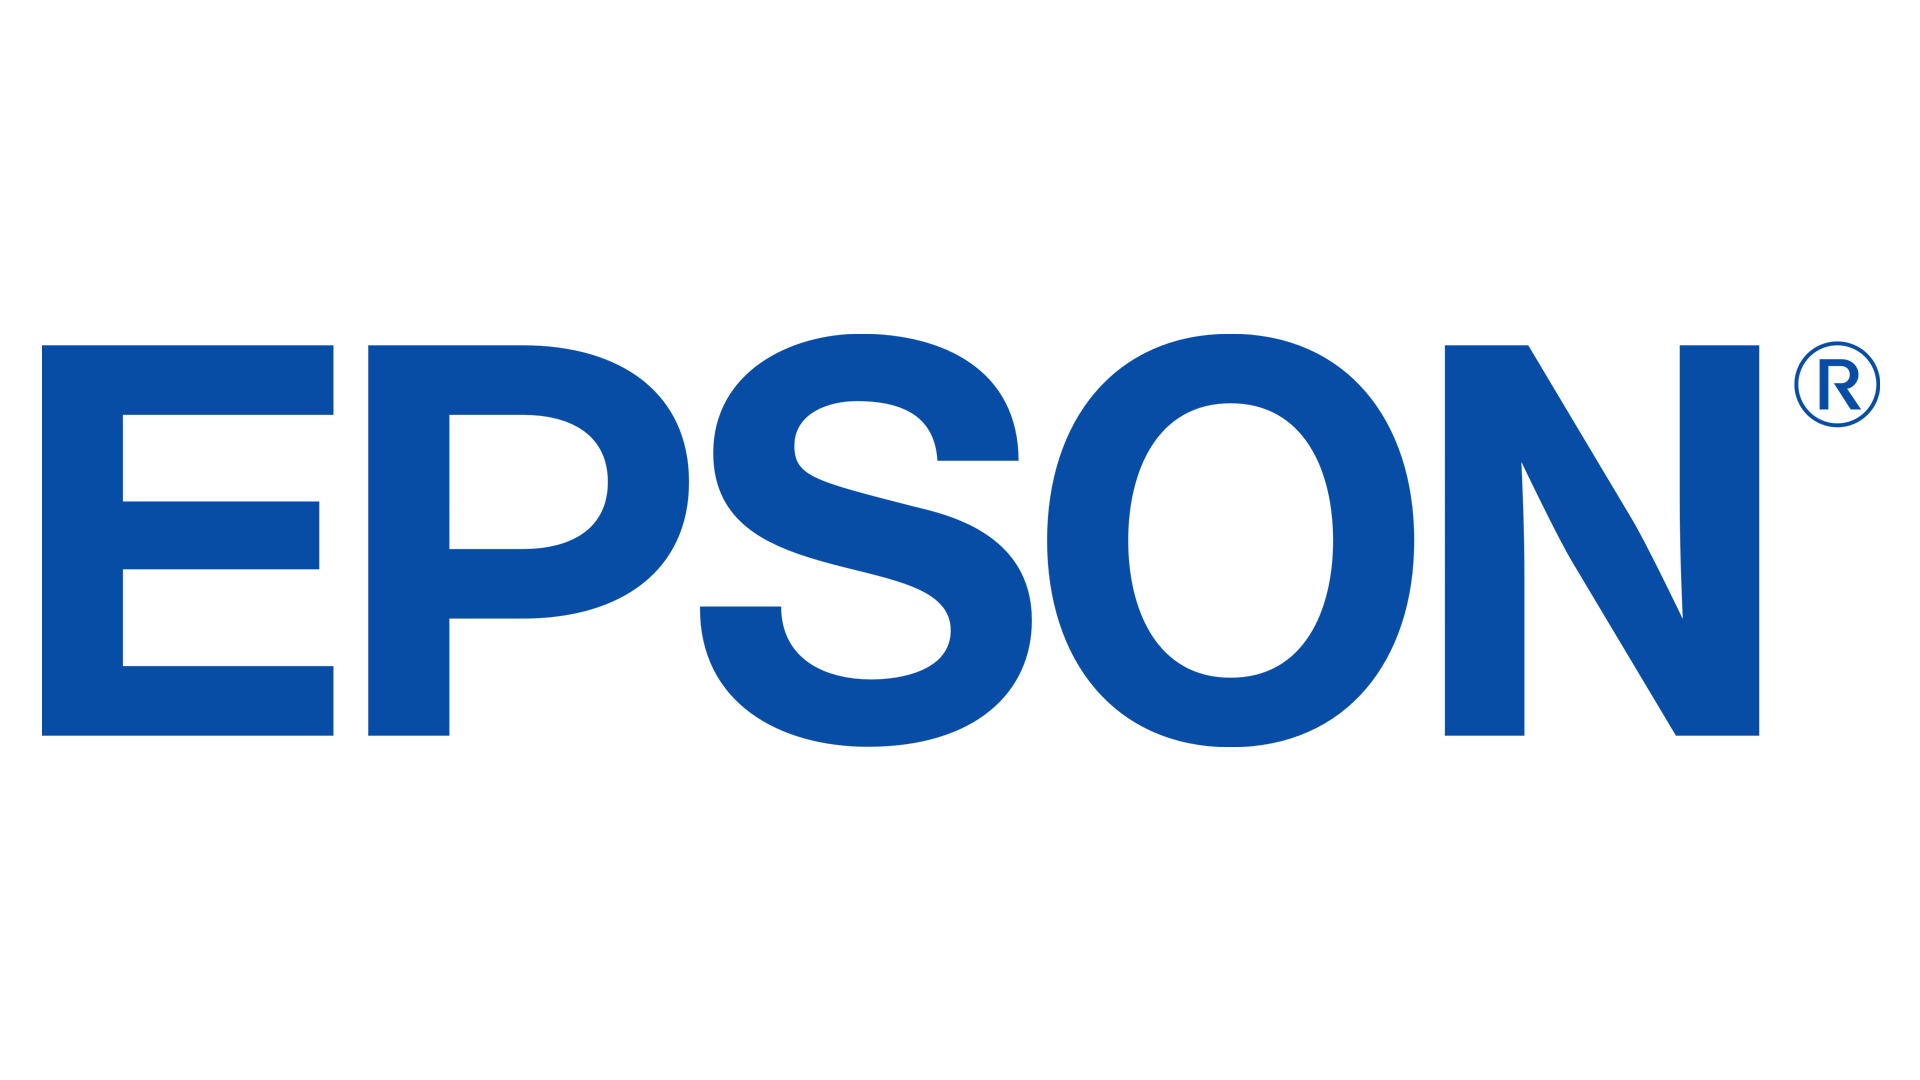 Epson Logo - Epson Logo, Epson Symbol, Meaning, History and Evolution